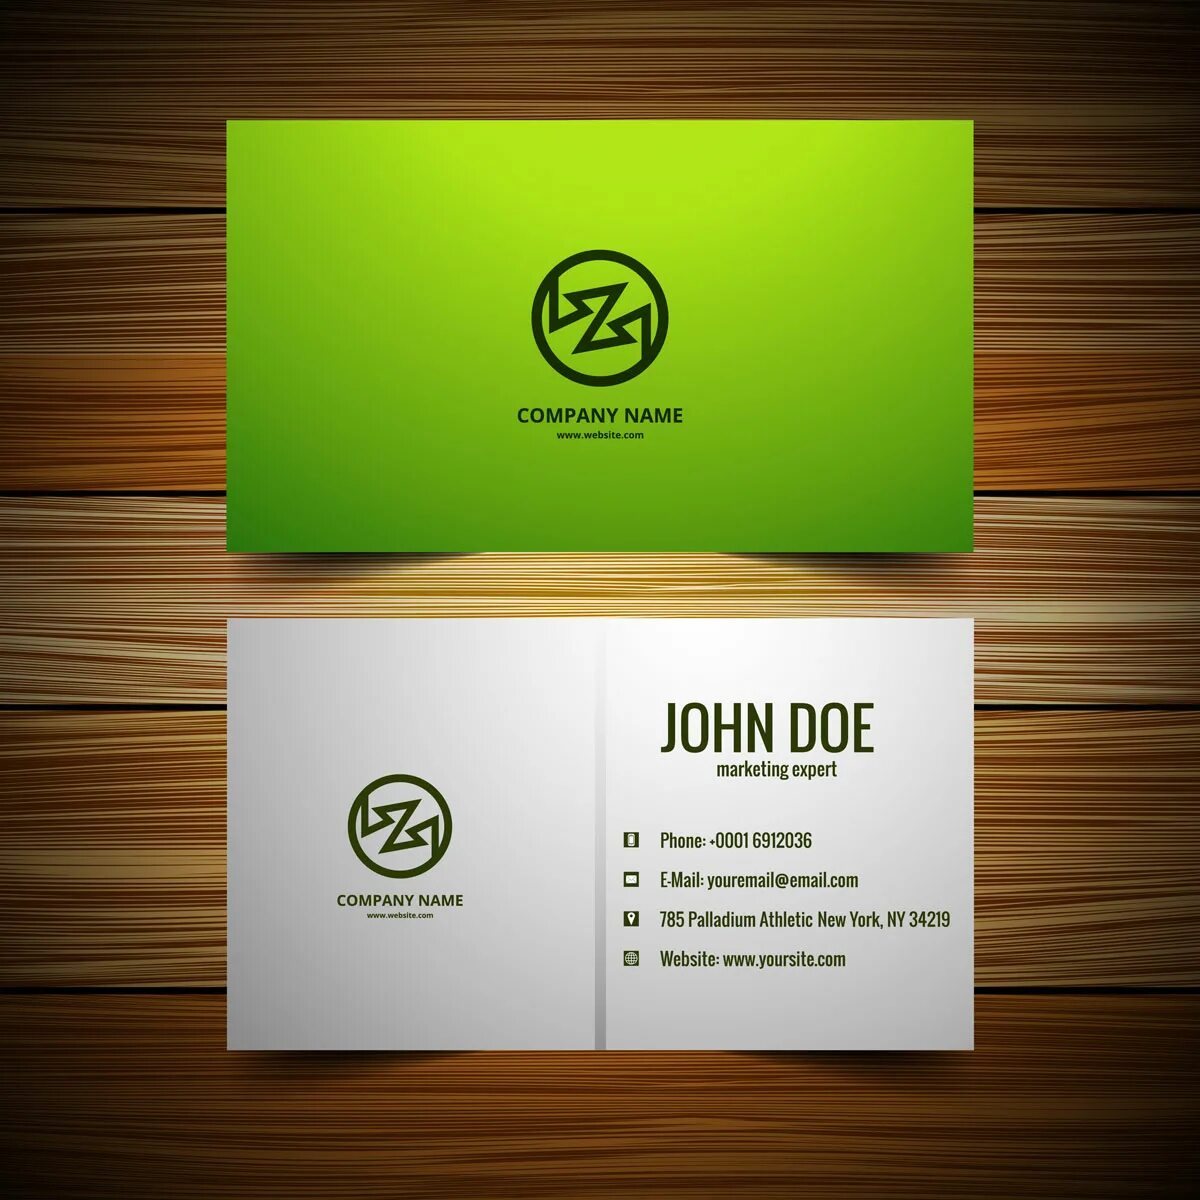 Логотип для визитки. Макет визитки. Визитка образец. Визитки зеленого цвета. Зеленая визитка